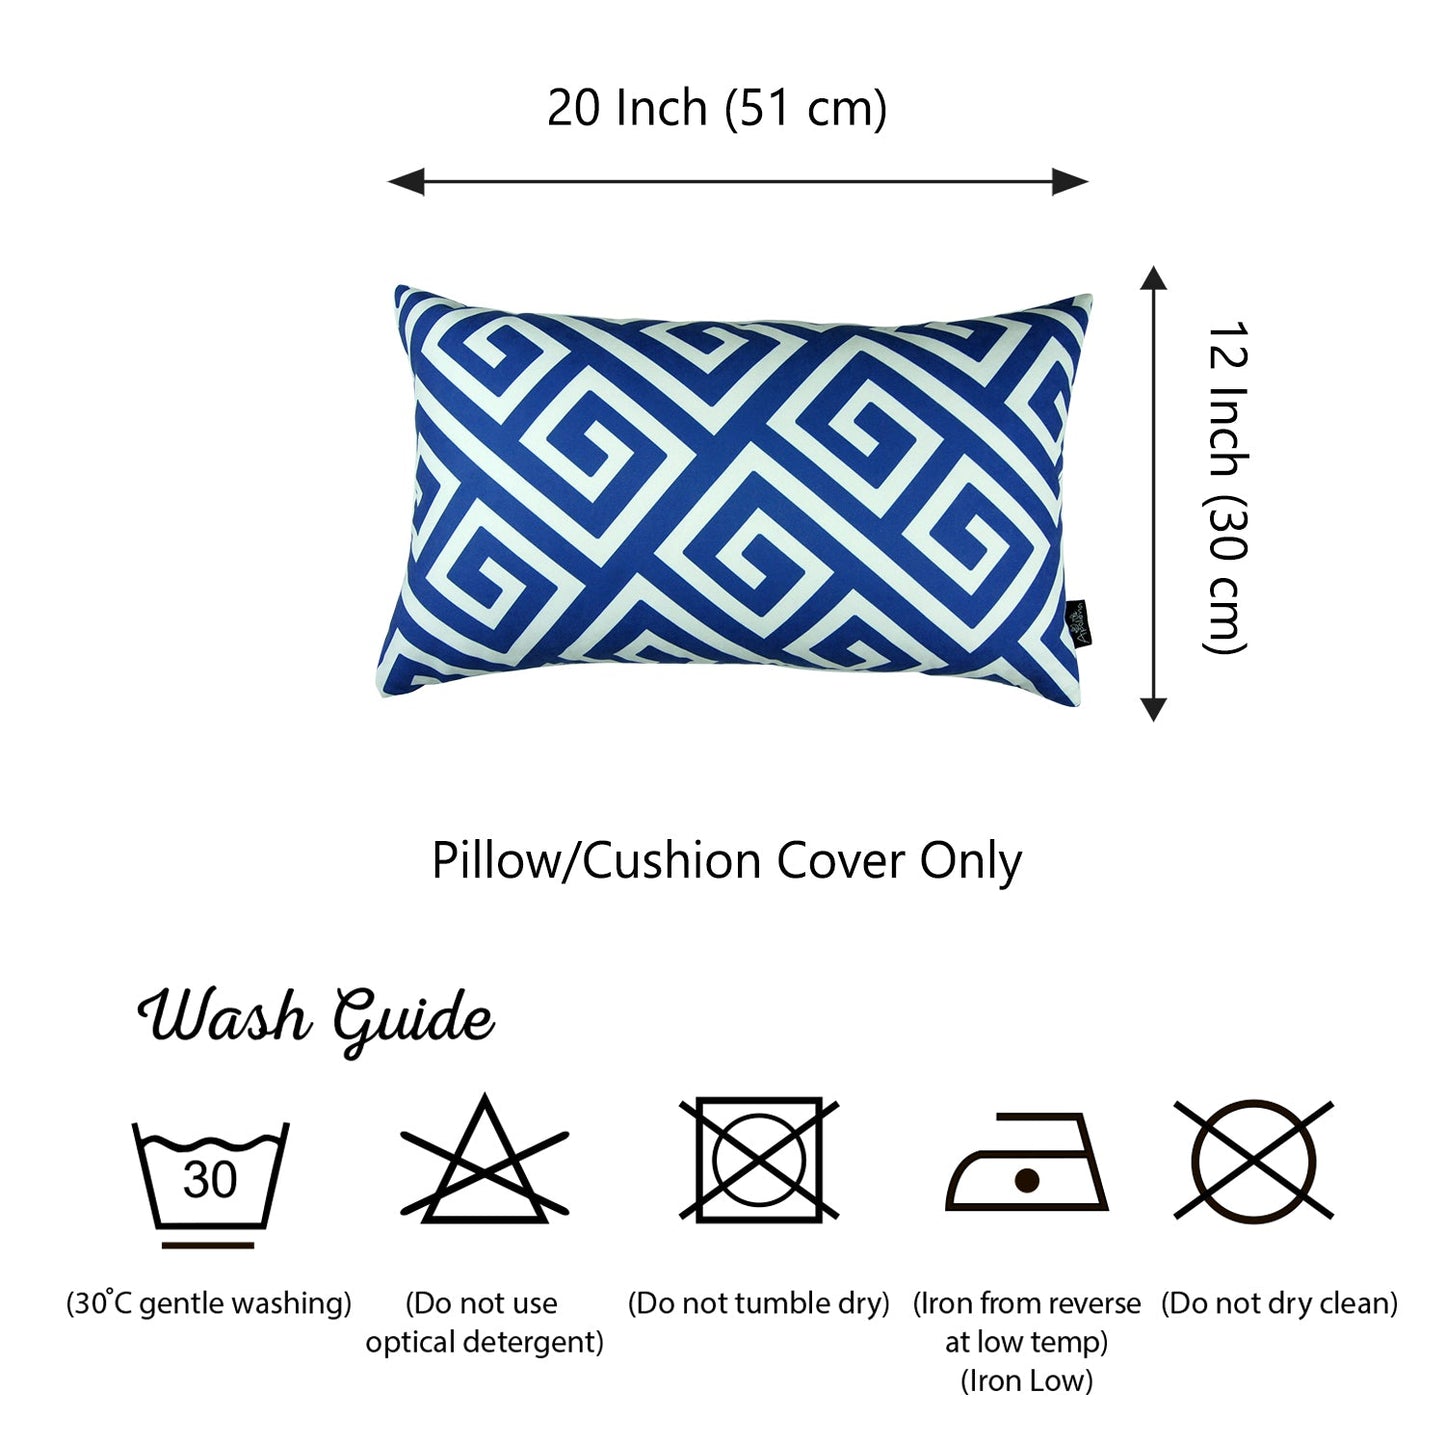 Decorative Throw Pillow Cover Set of 4 Greek Key 12" x 20"